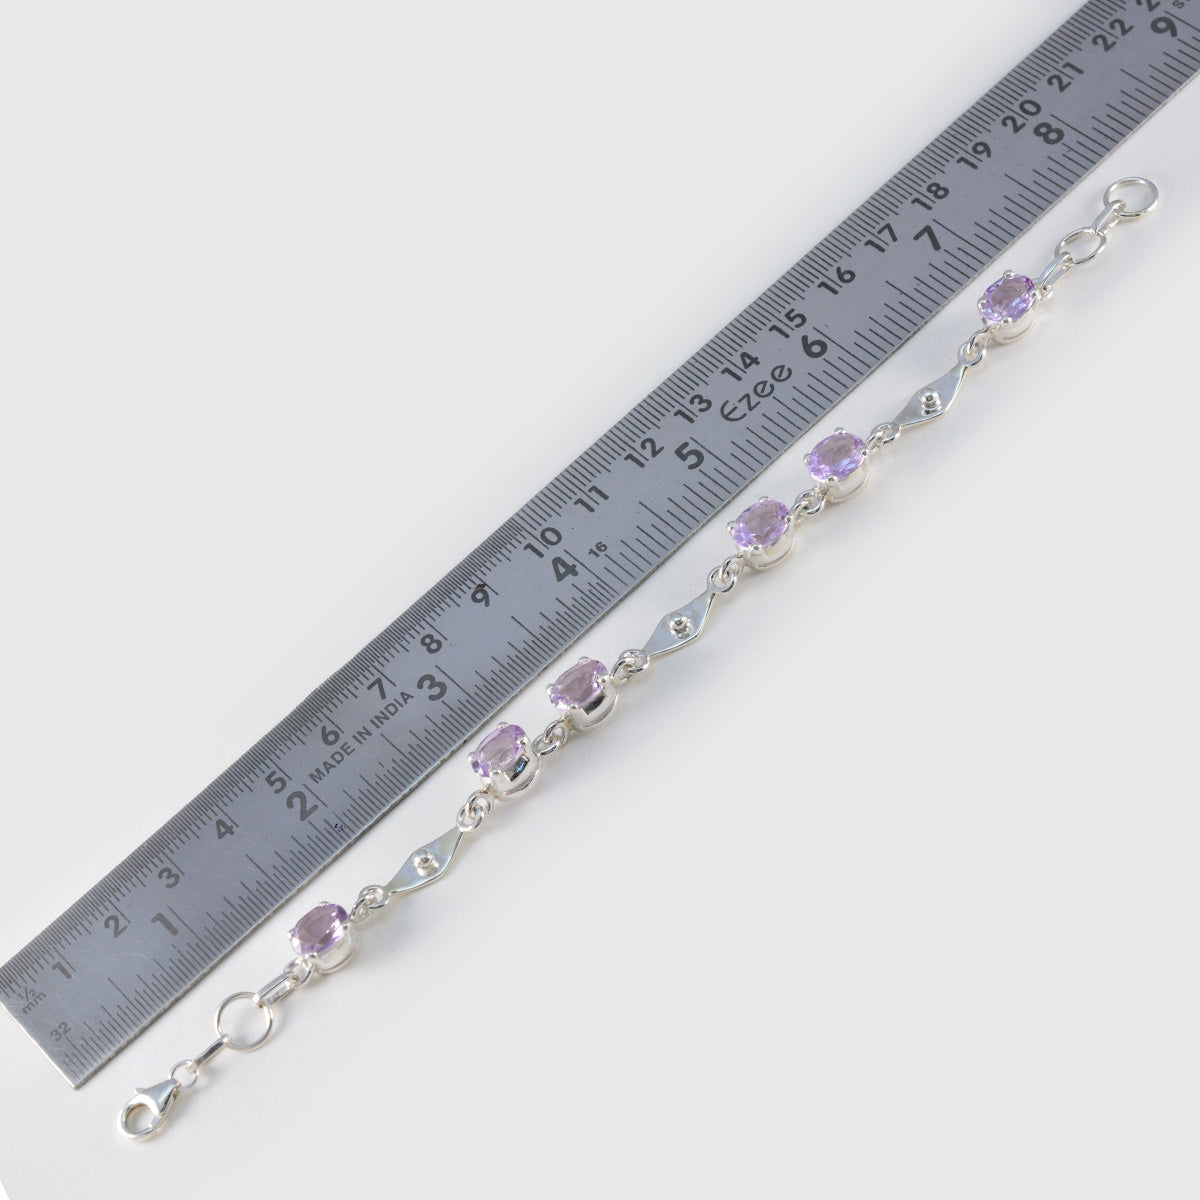 Riyo Klassieke 925 Sterling Zilveren Armband Voor Vrouwen Amethist Armband Prong Setting Armband Met Vishaak Schakelarmband L Maat 6-8,5 Inch.